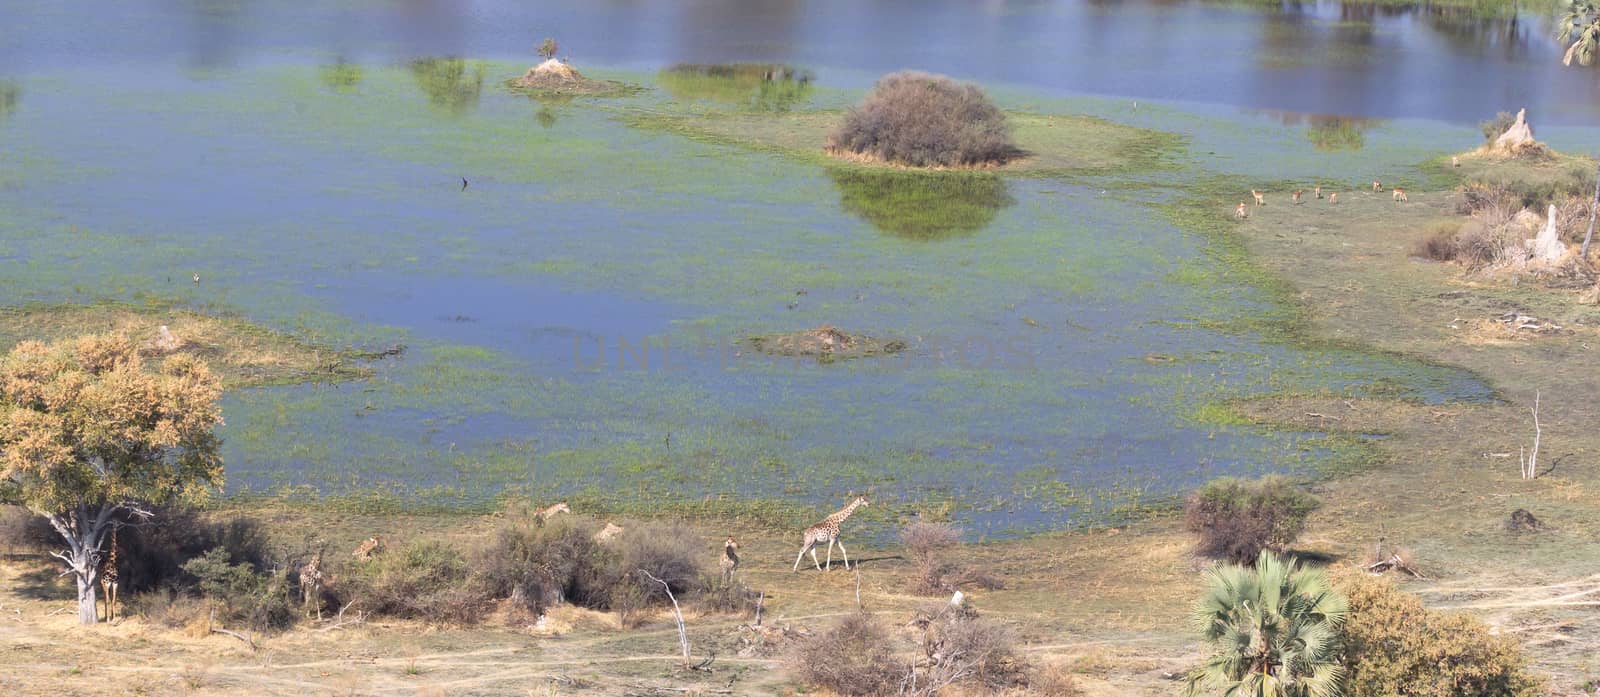 Giraffes in the Okavango delta (Botswana), aerial shot